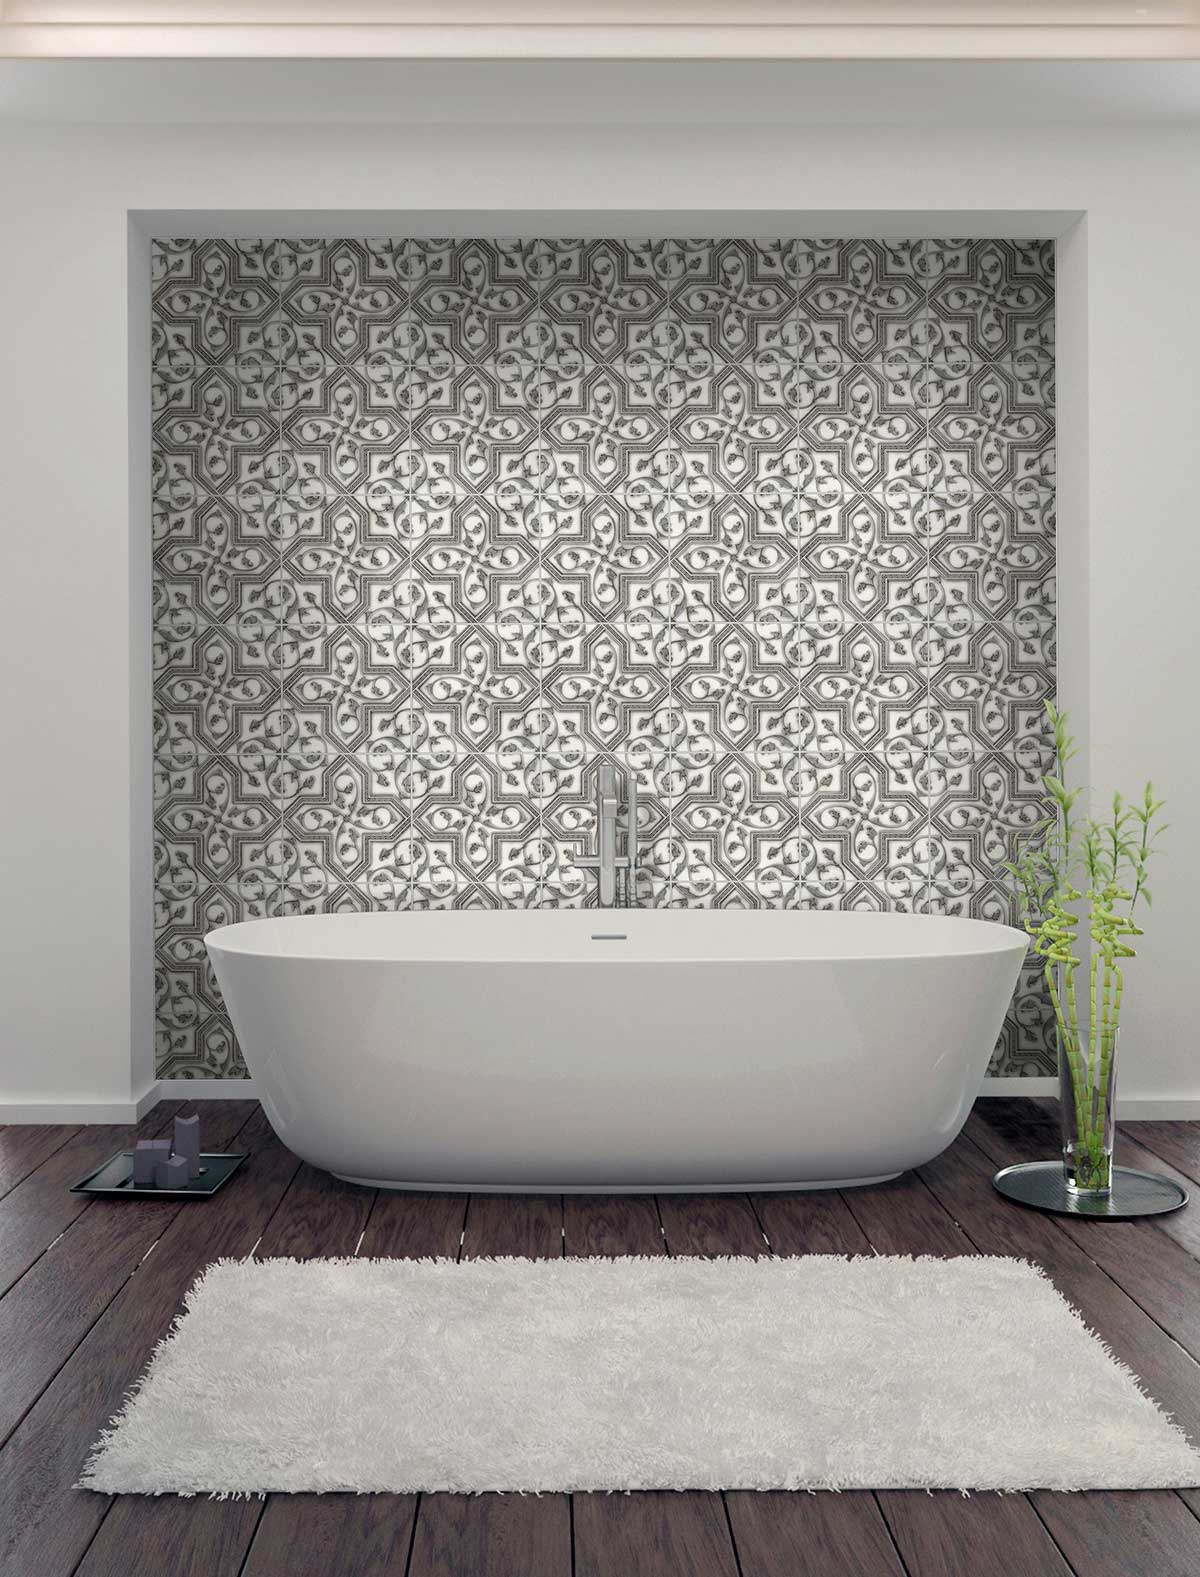 Decorative bathroom tile - Florence Grigio on Carrara Bathroom Installation